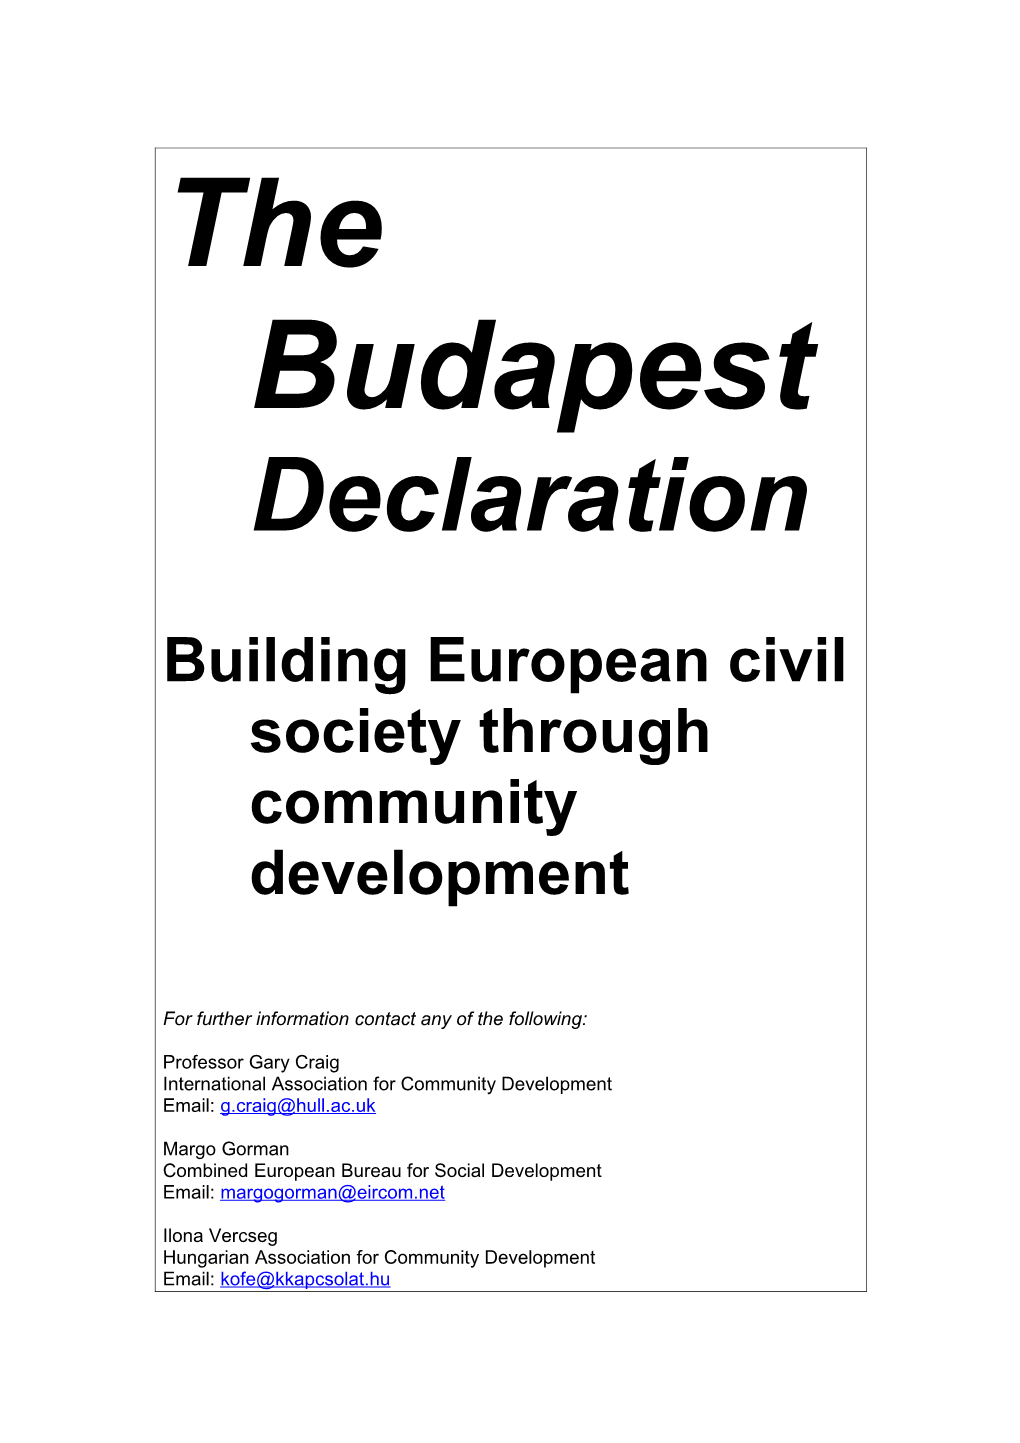 The Budapest Declaration